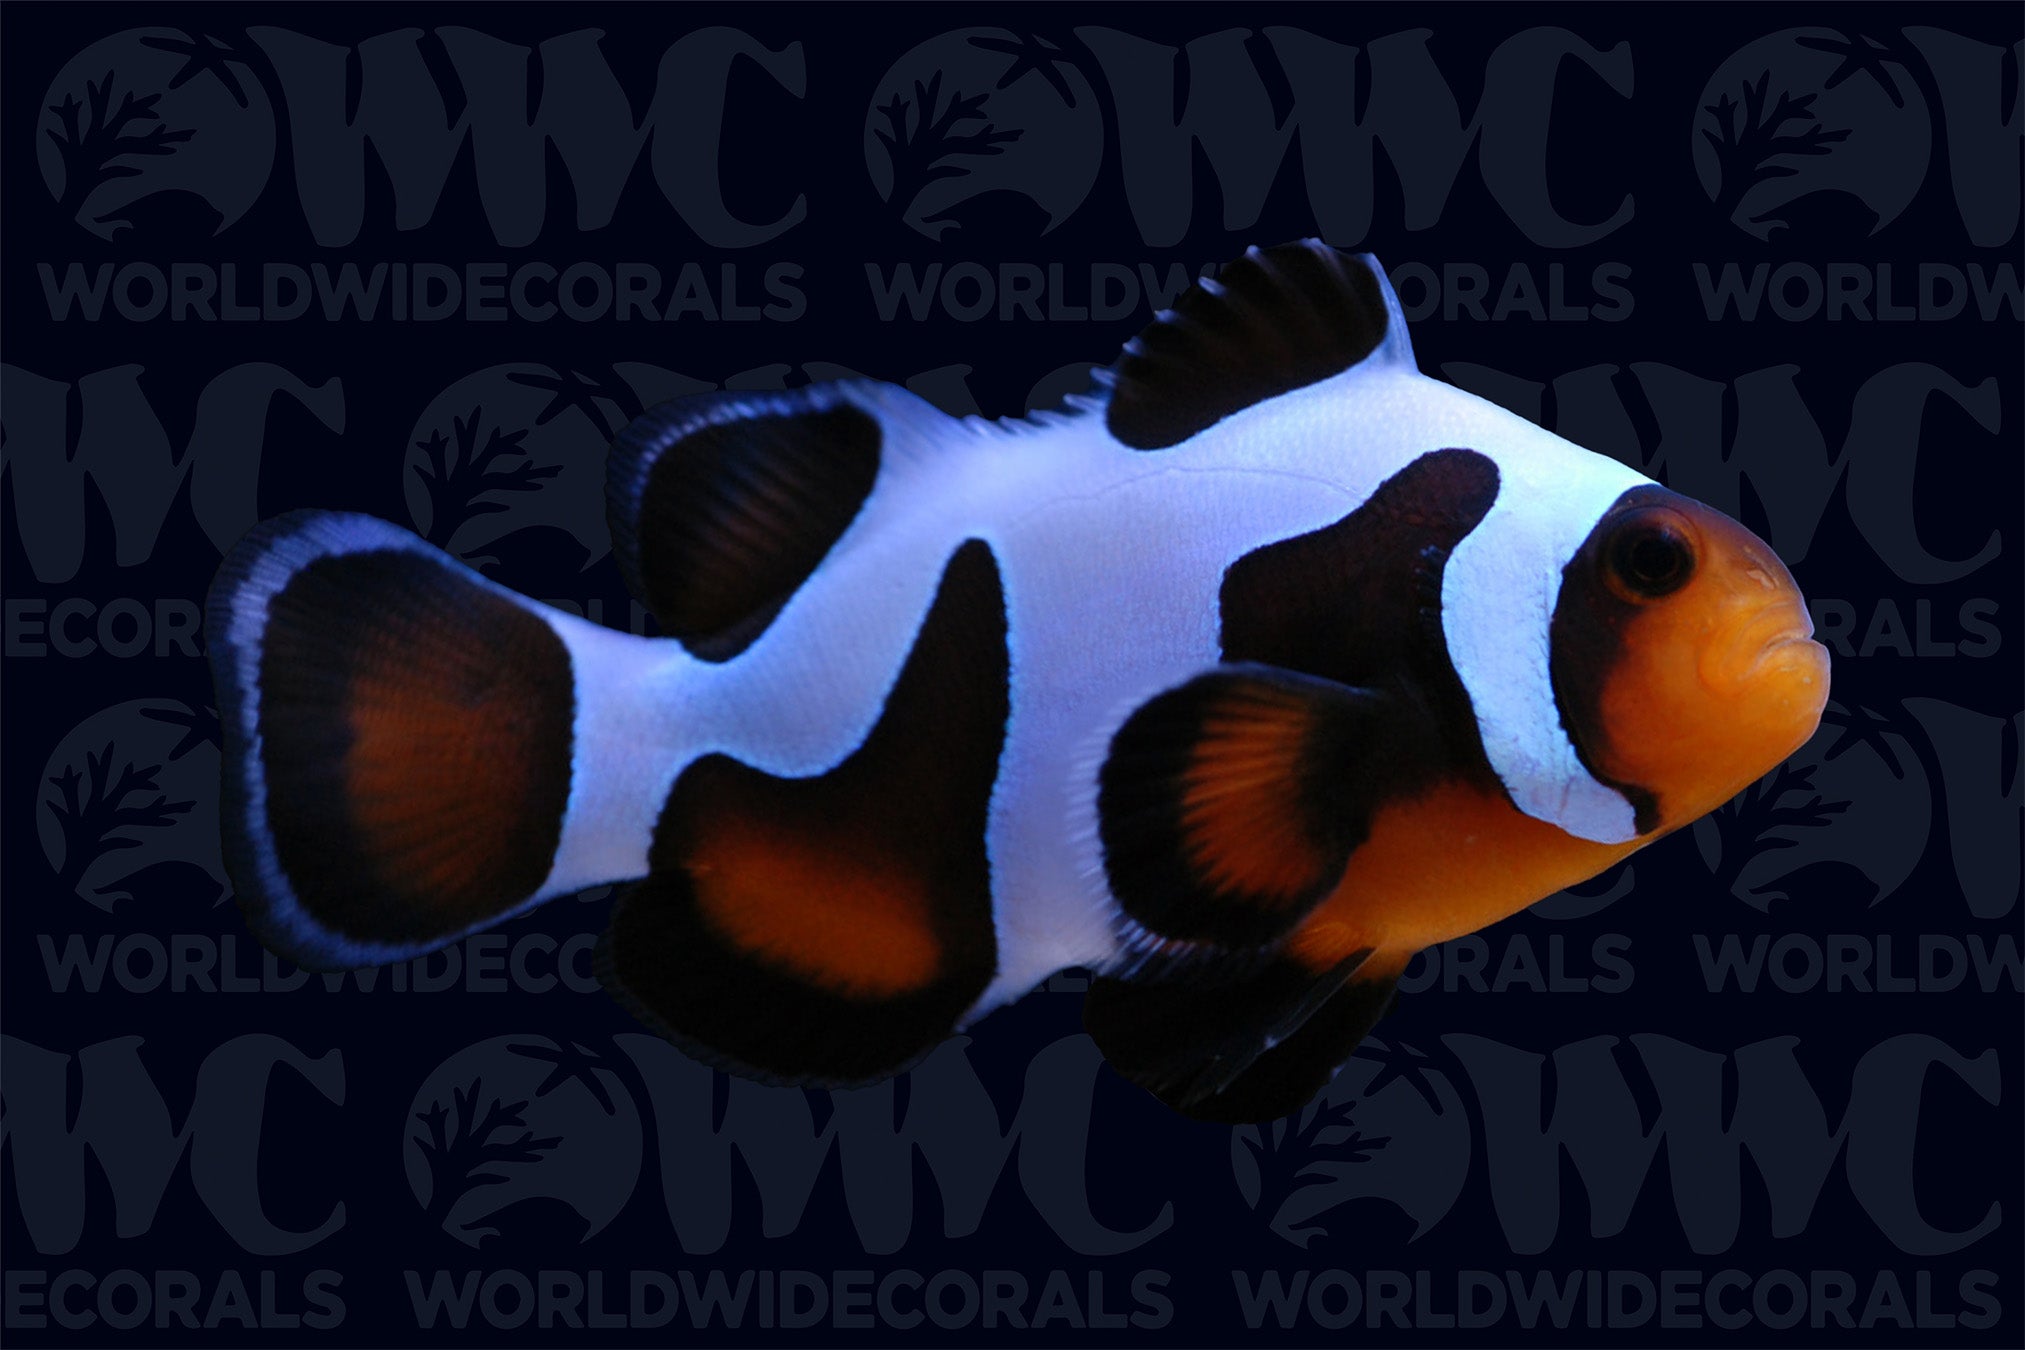 da Vinci Grade A Clownfish - Aquacultured - U.S.A.